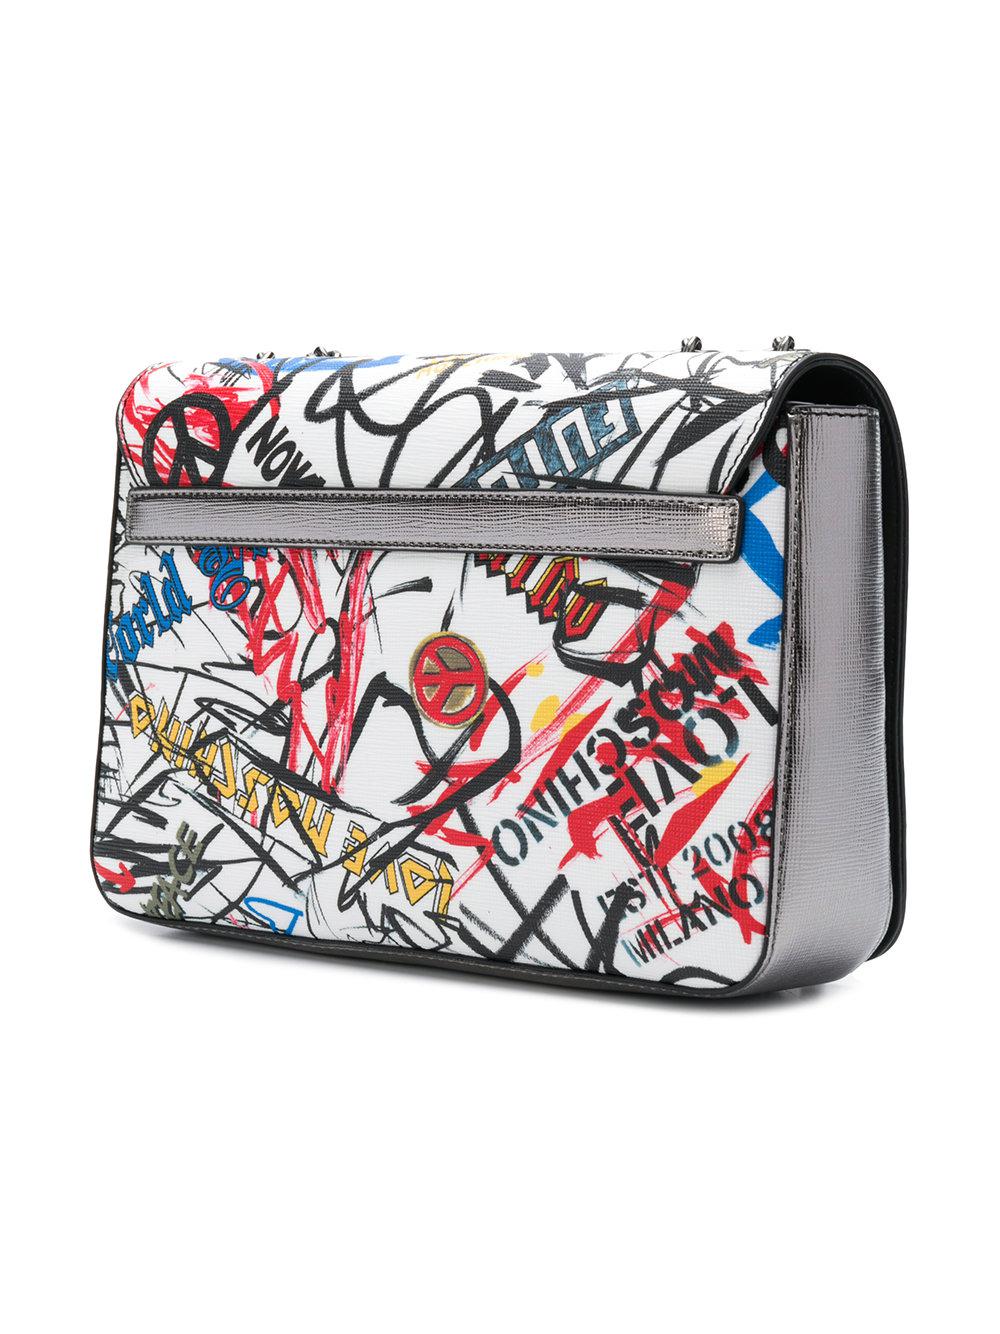 Love Moschino Graffiti Shoulder Bag in 